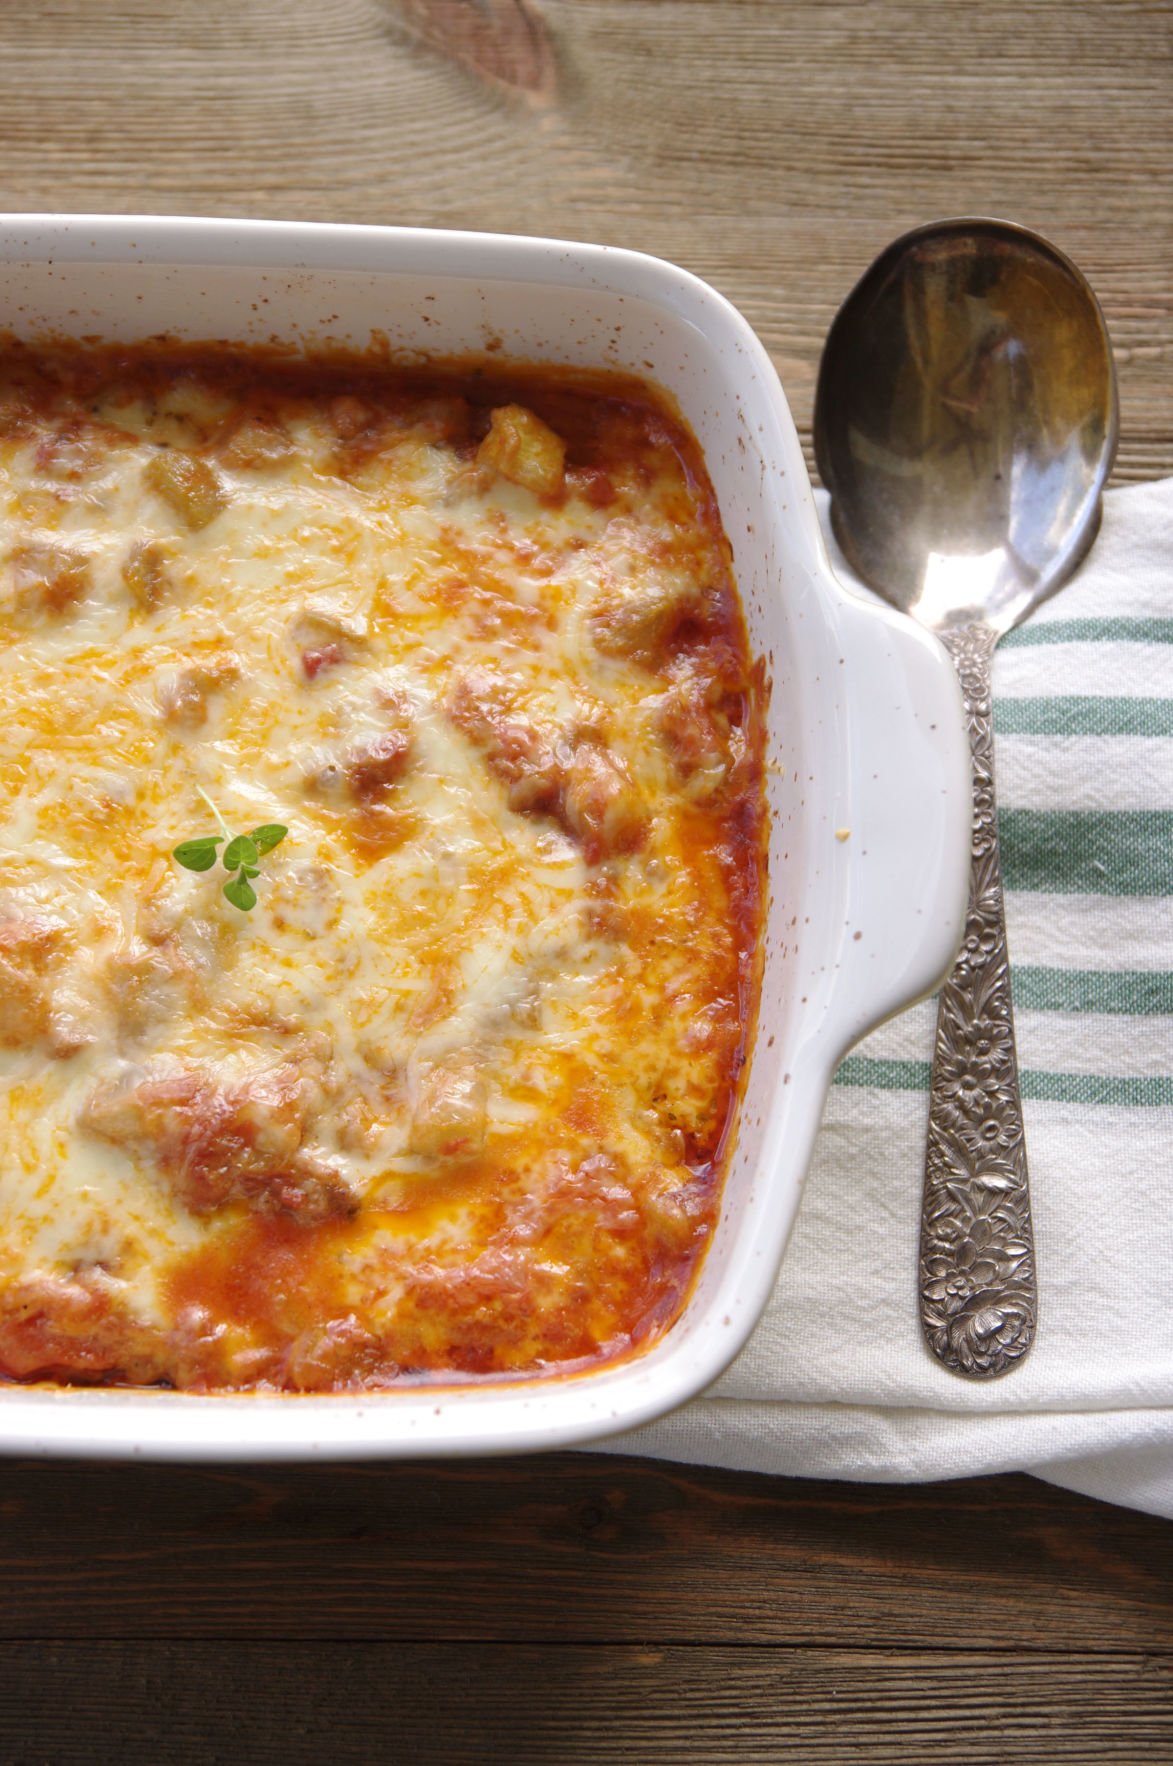 I Eat La.: Recipe for Cucuzza Casserole | Food/Restaurants ...